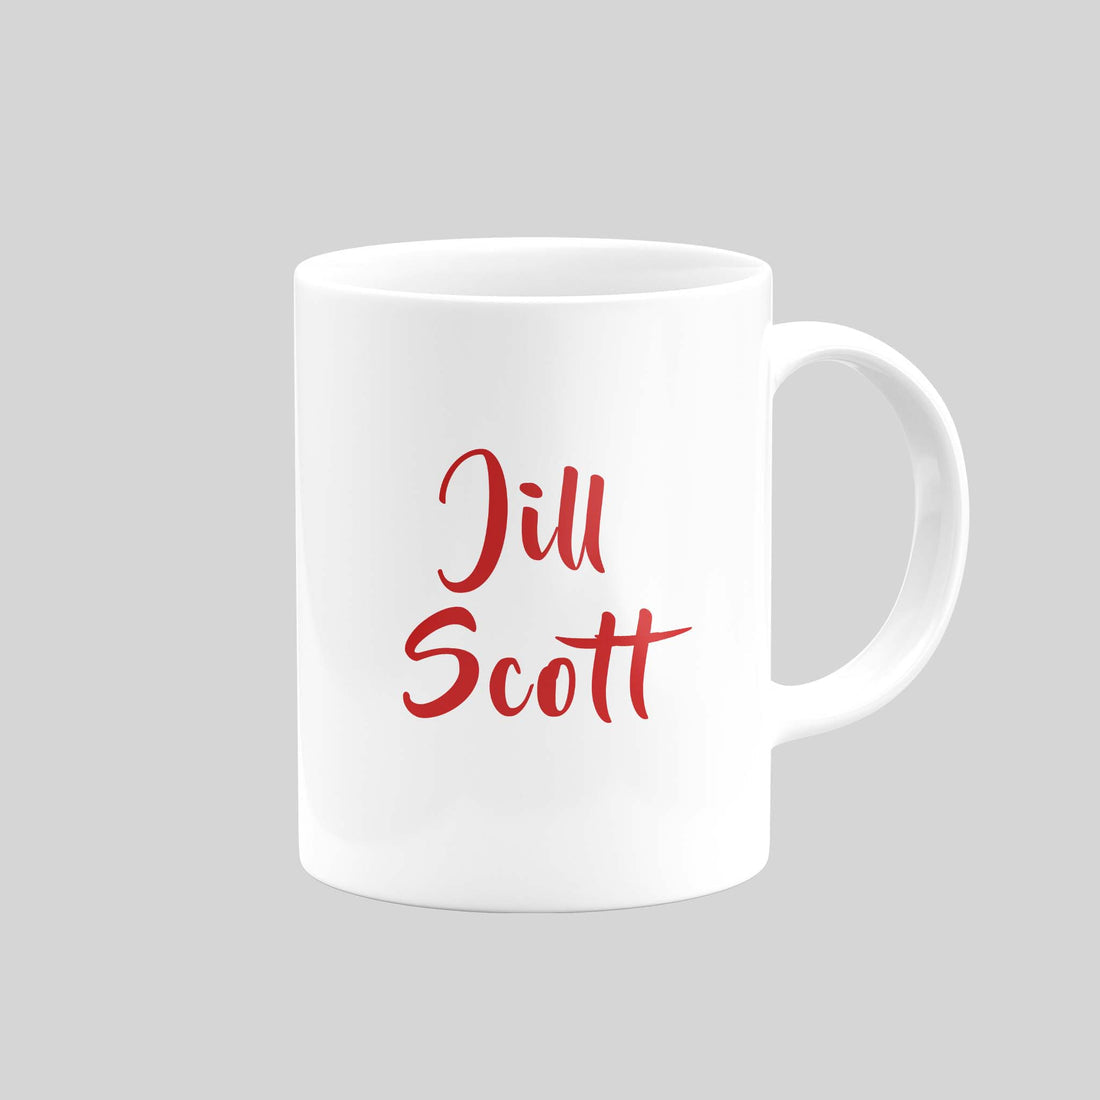 Jill Scott mug